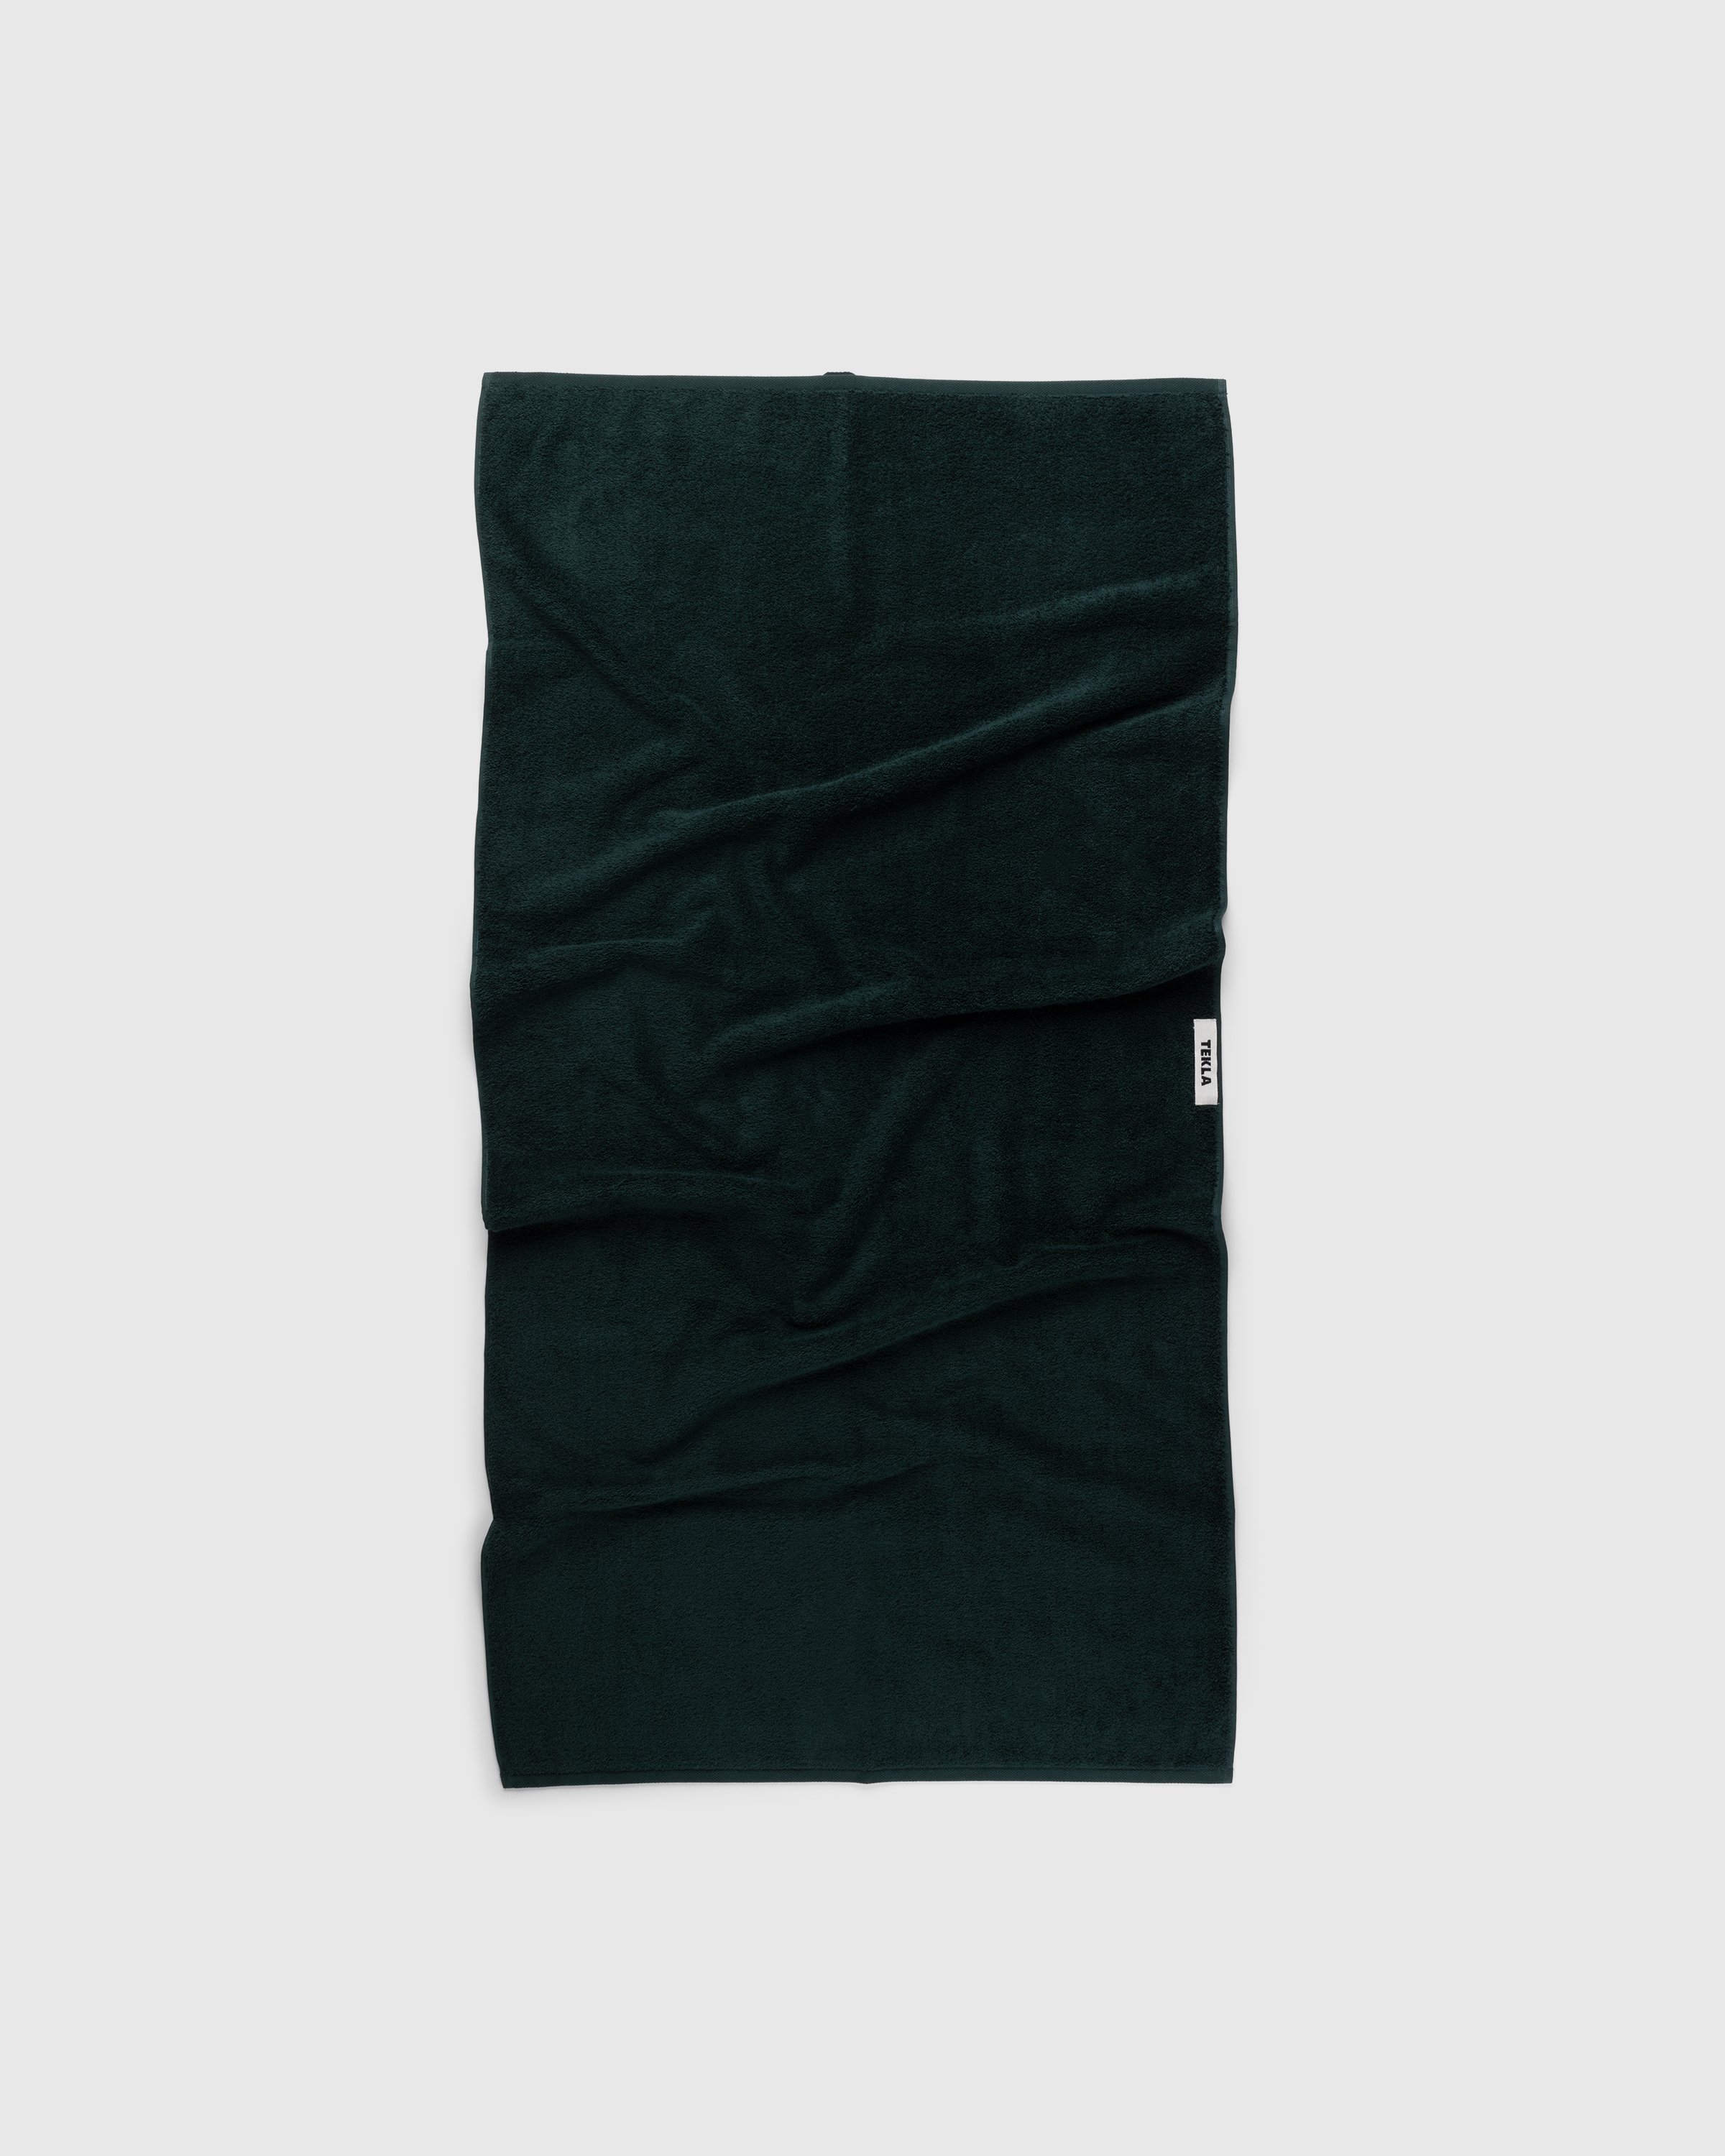 Tekla - Bath Towel Forest Green - Lifestyle - Green - Image 1